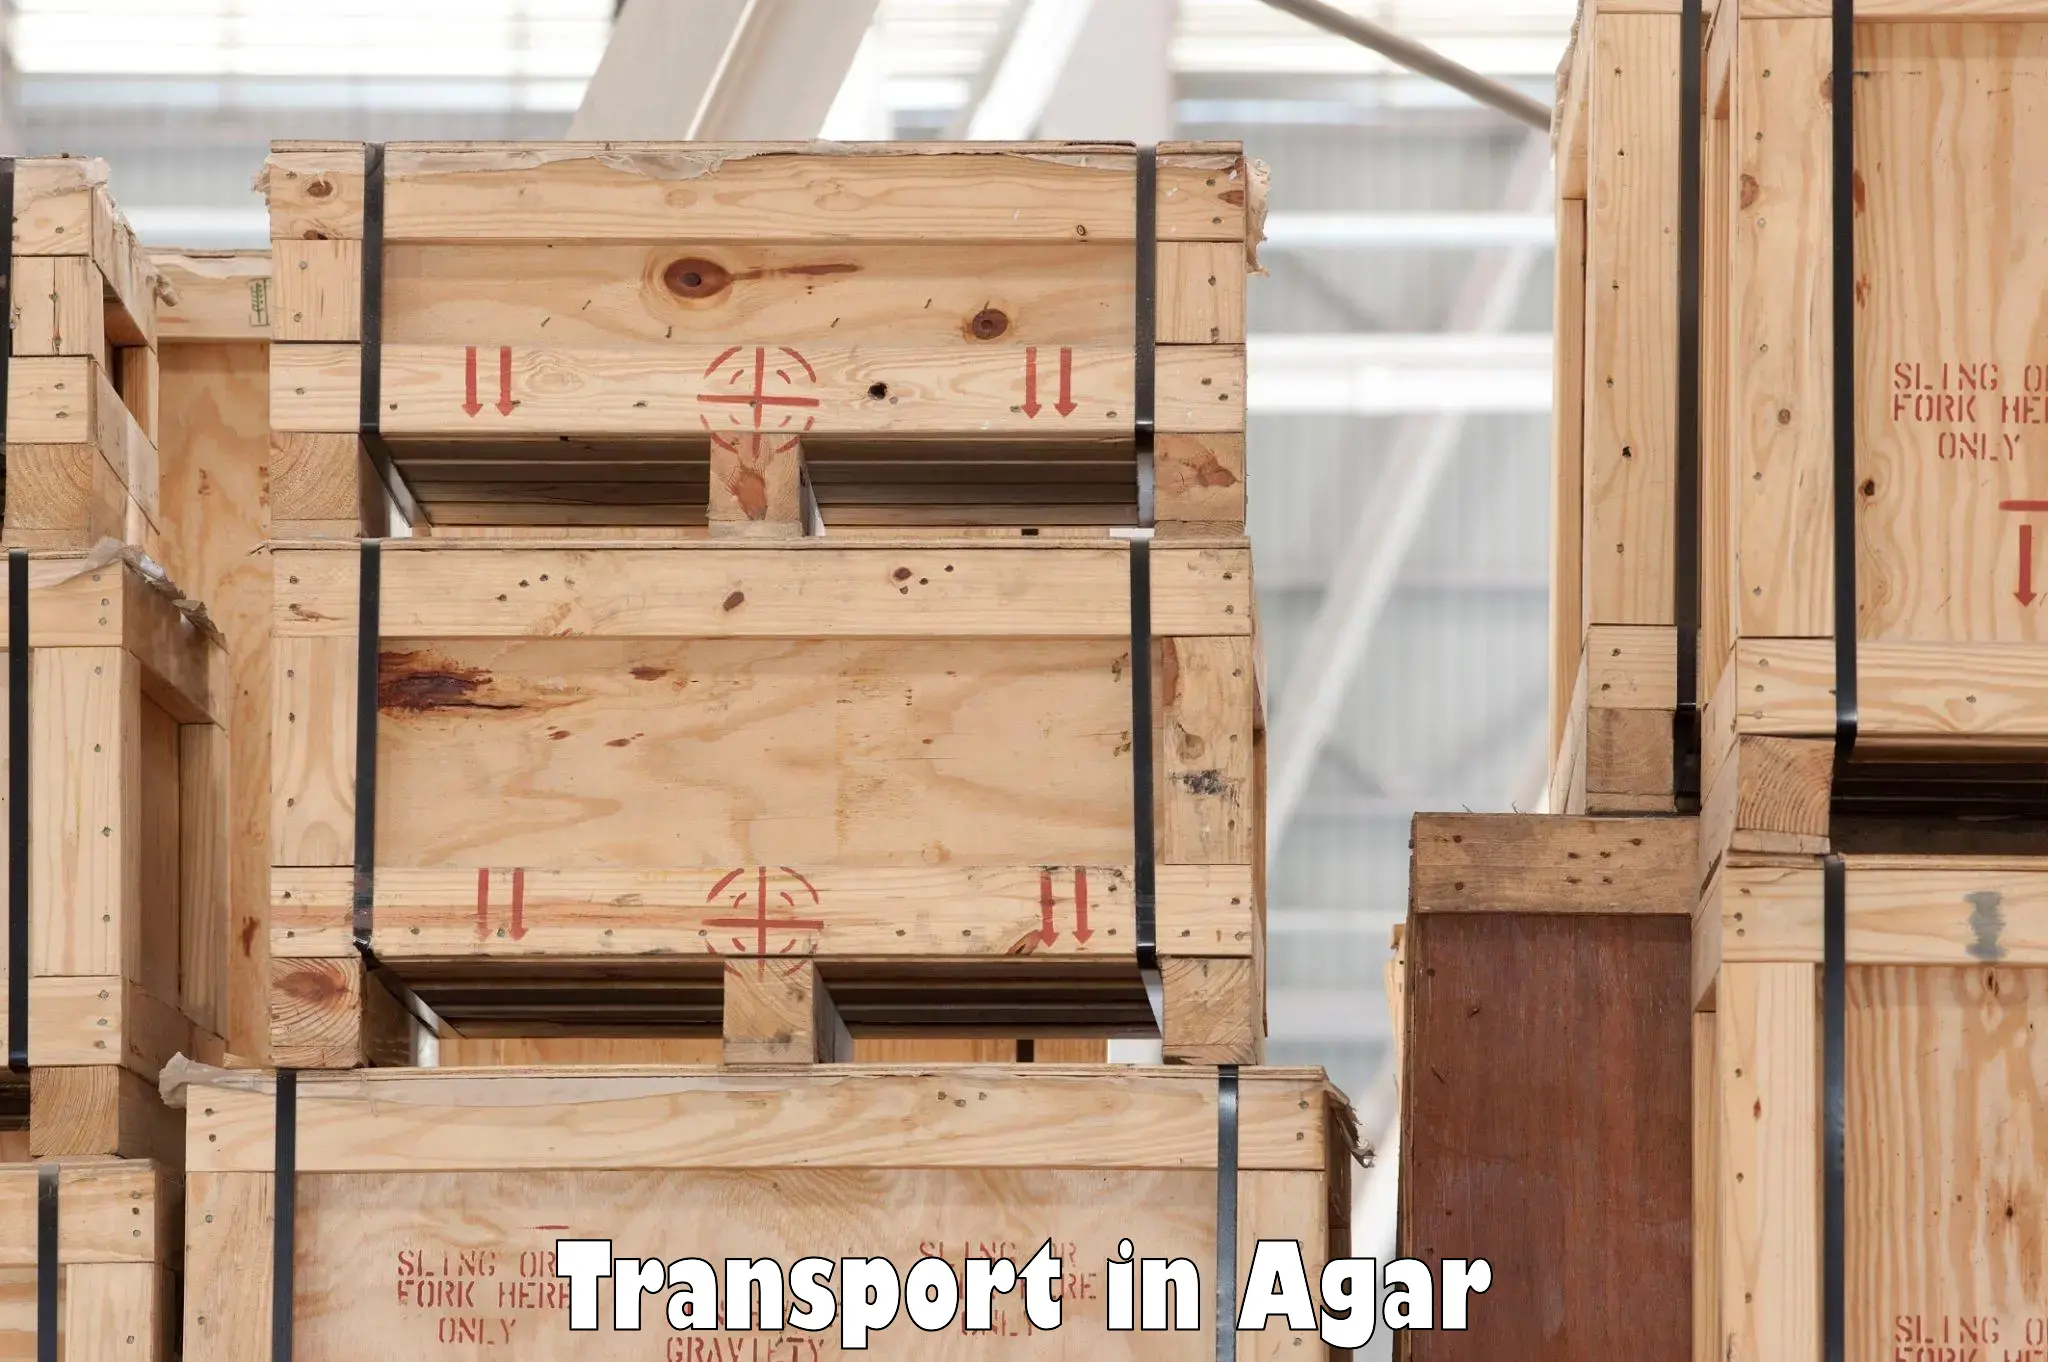 Shipping partner in Agar